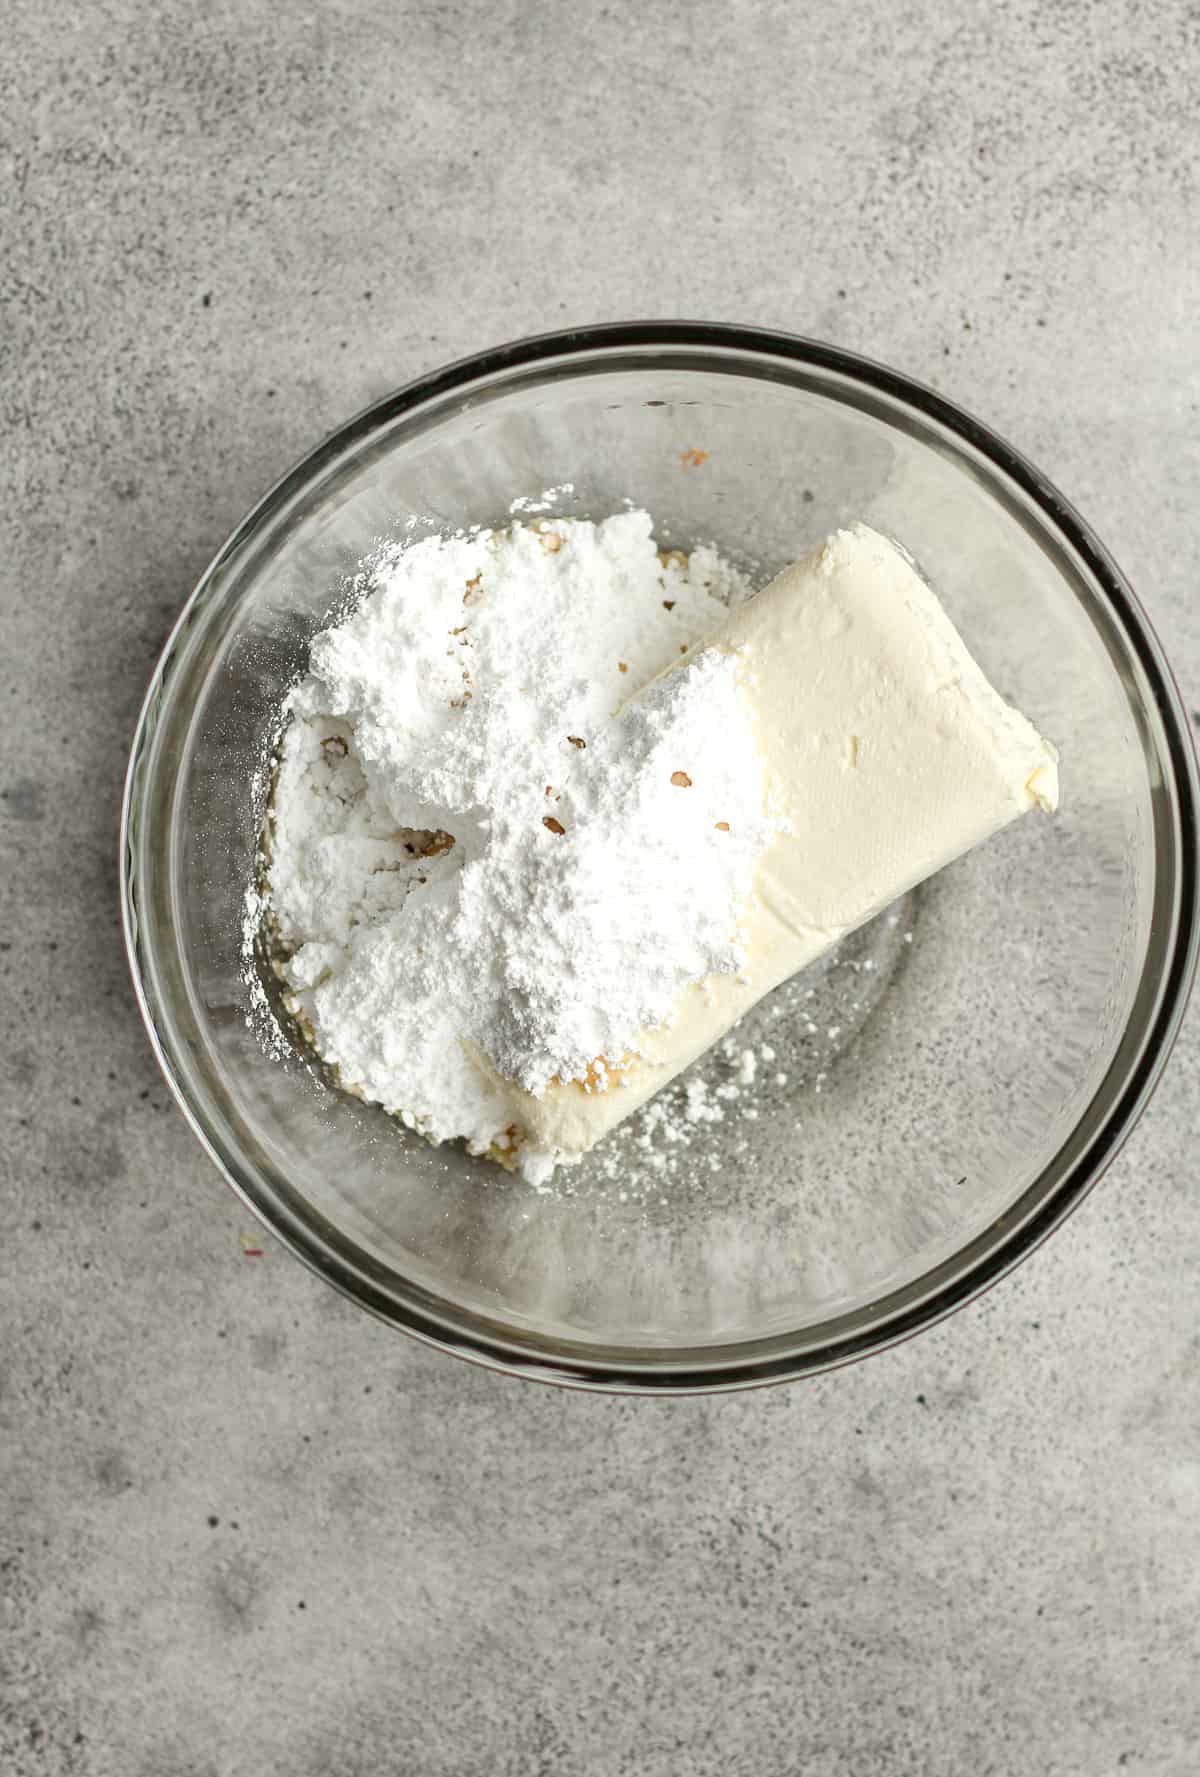 A bowl of the cream cheese, powdered sugar, vanilla - before mixing.